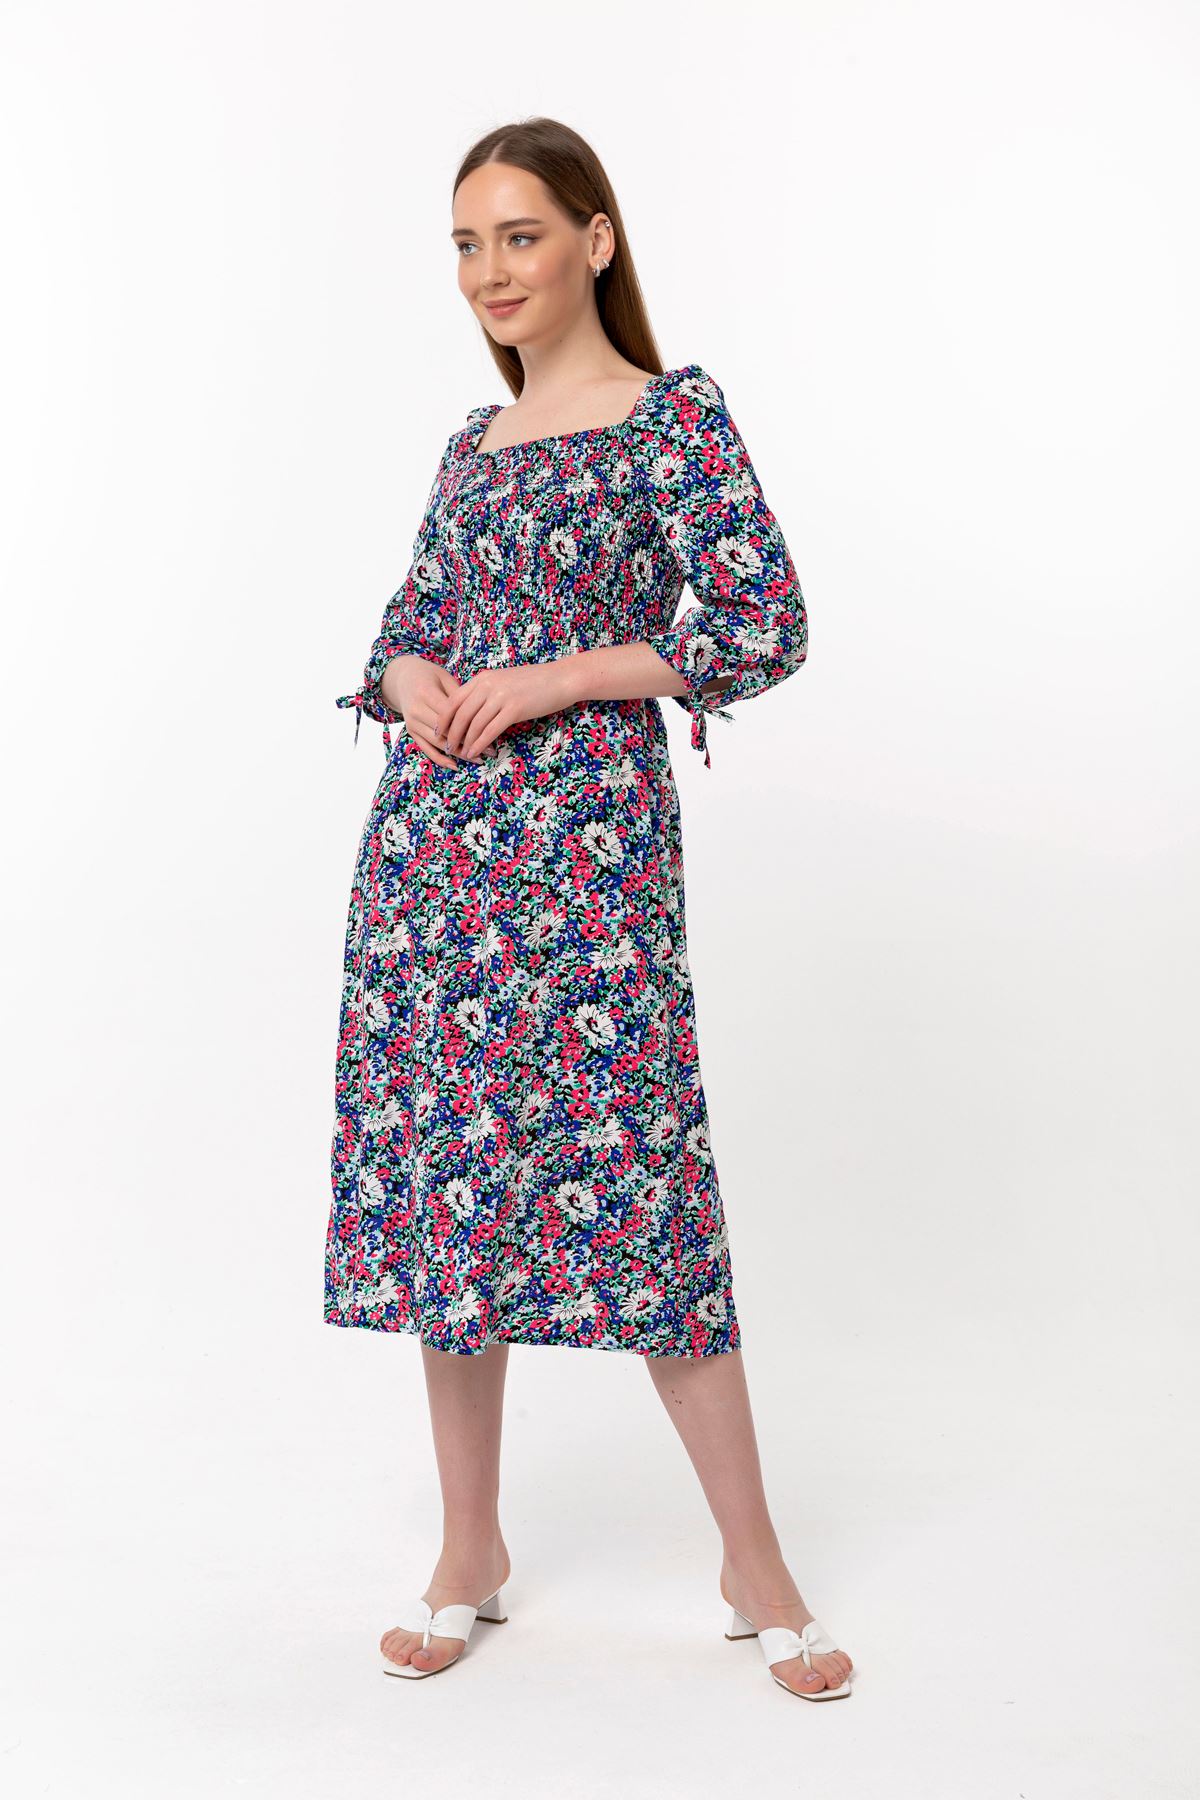 Viscose Fabric Square Neckline Midi Floral Print Women Dress - Blue